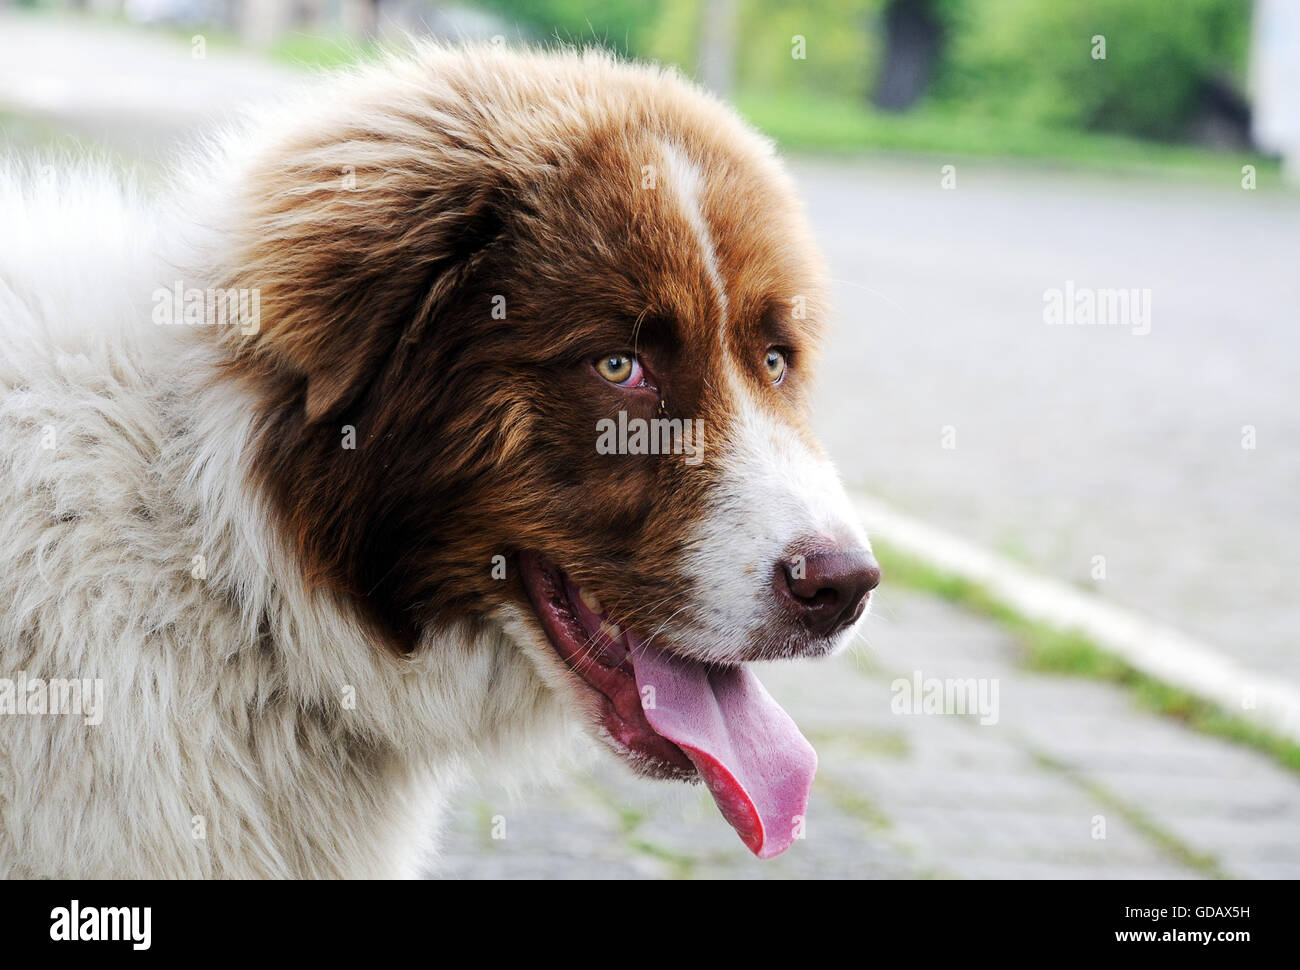 Saint bernard dog standing on the street Stock Photo